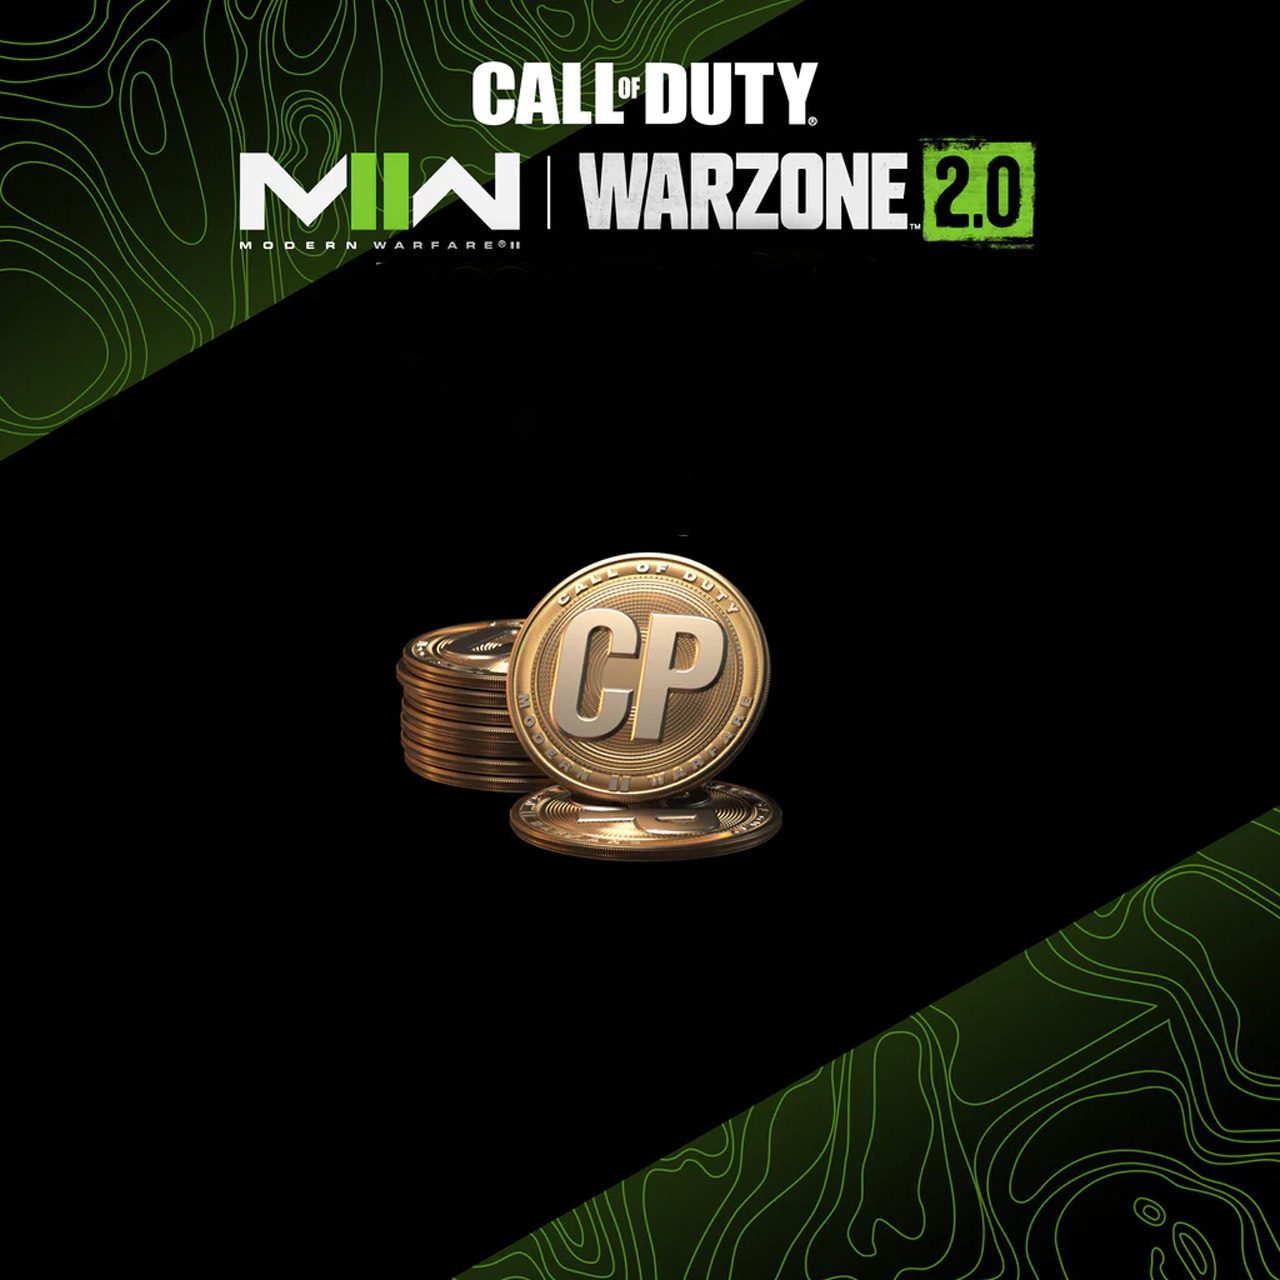 Call of Duty Warzone 2.0 Points ps 7 - خرید سی پی بازی Call of Duty:Modern Warfare II or Warzone 2.0 برای PS4 و PS5